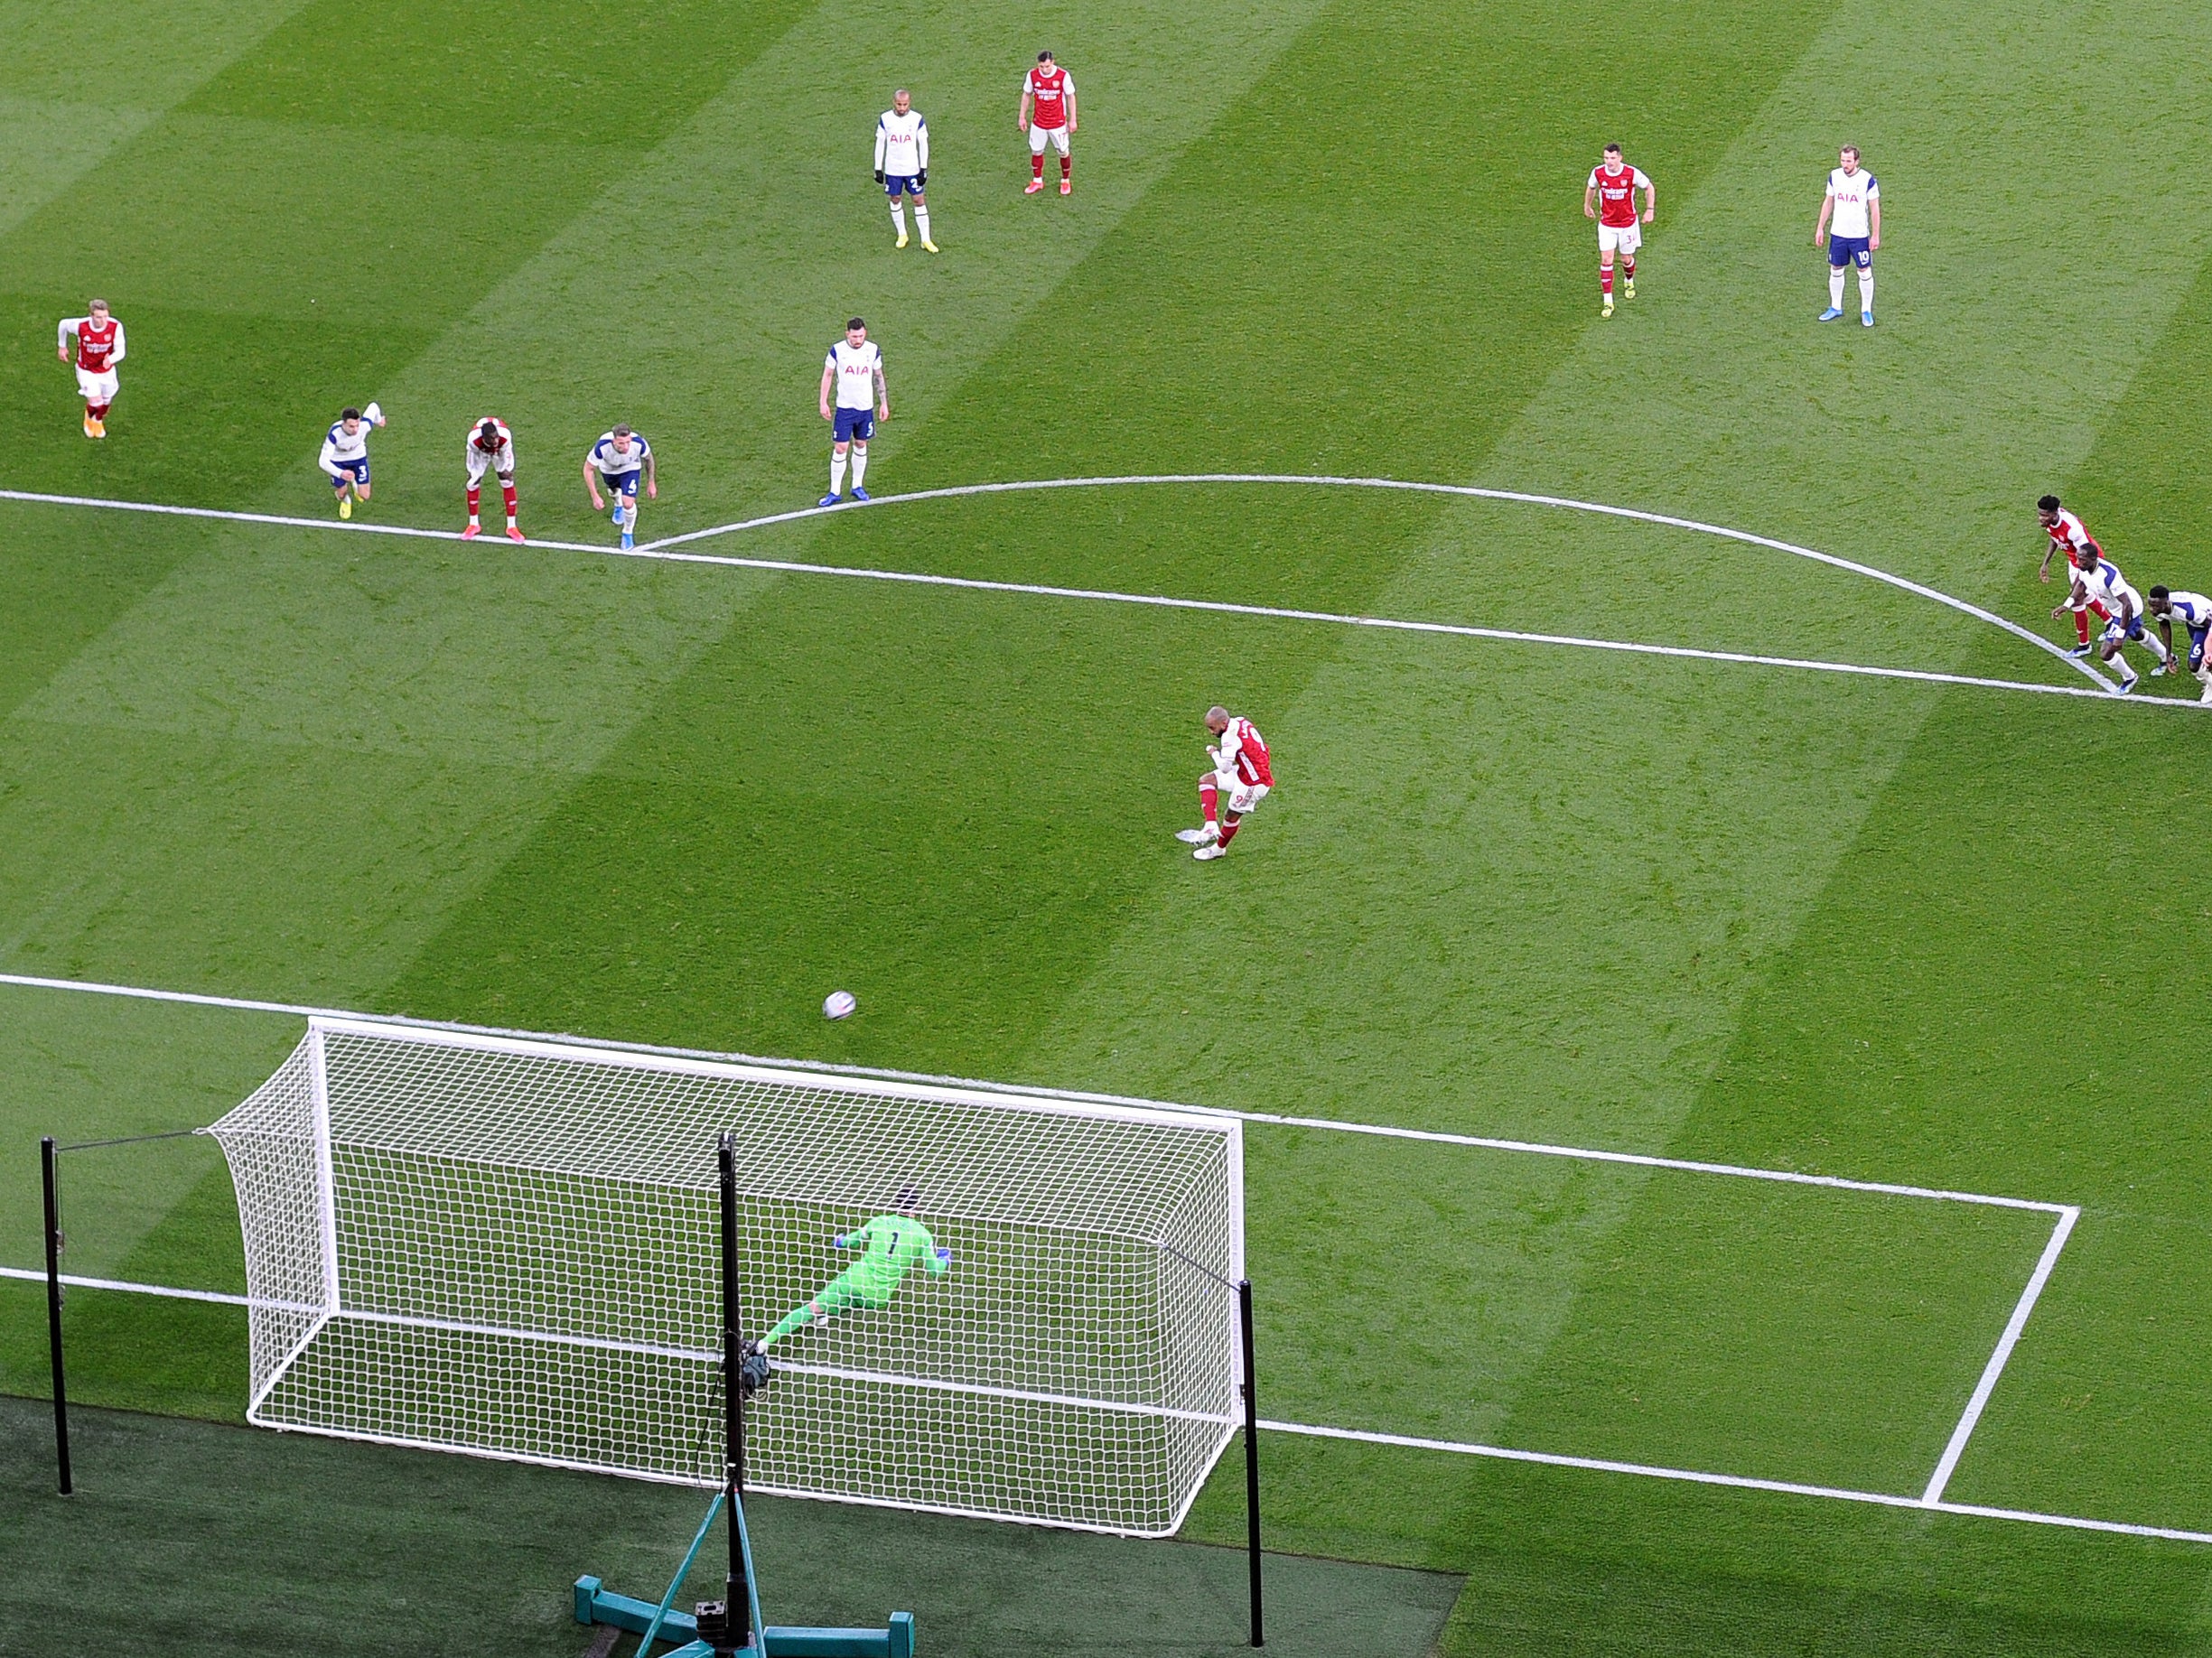 Alexandre Lacazette won and scored Arsenal’s penalty against Tottenham